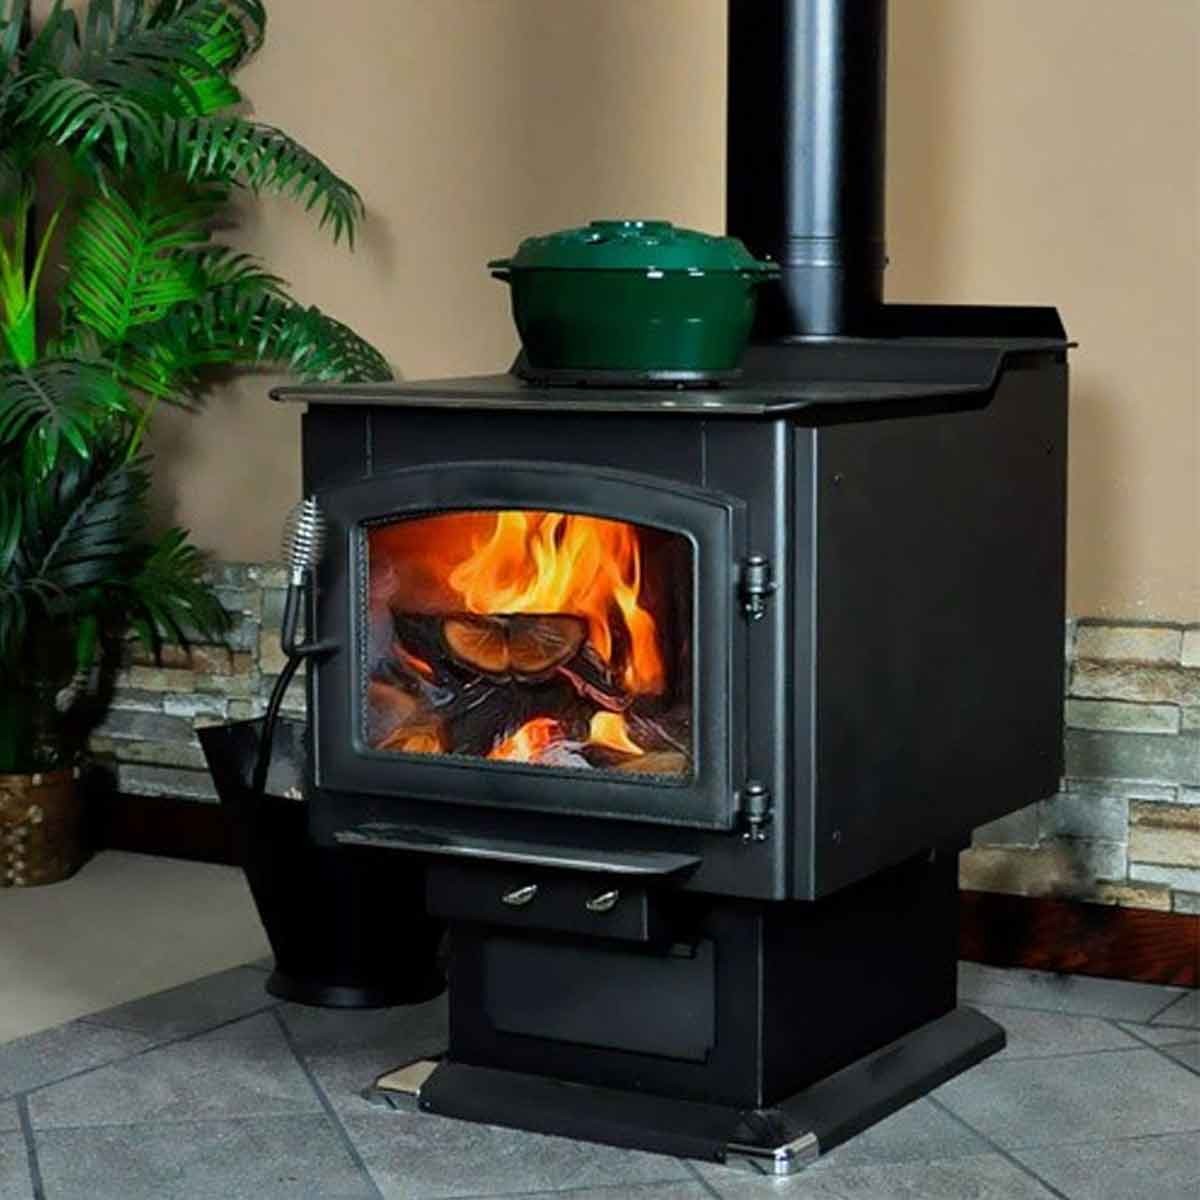 nle5vz tr007 00 vogelzang ponderosa wood burning stove with blower